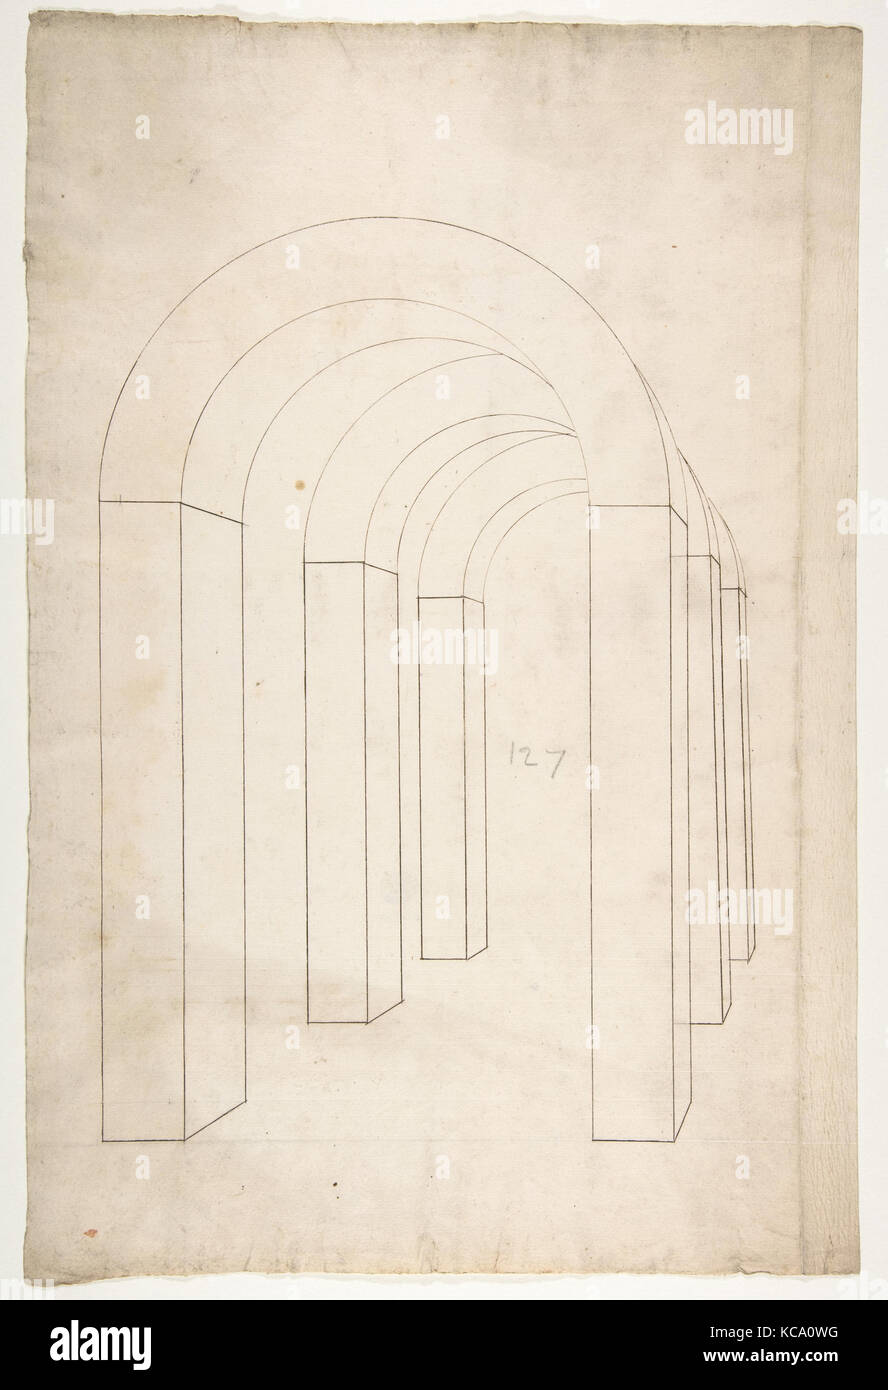 Estudio sobre la perspectiva de una columnata arqueada, anónimos, francés, del siglo XVI. Foto de stock